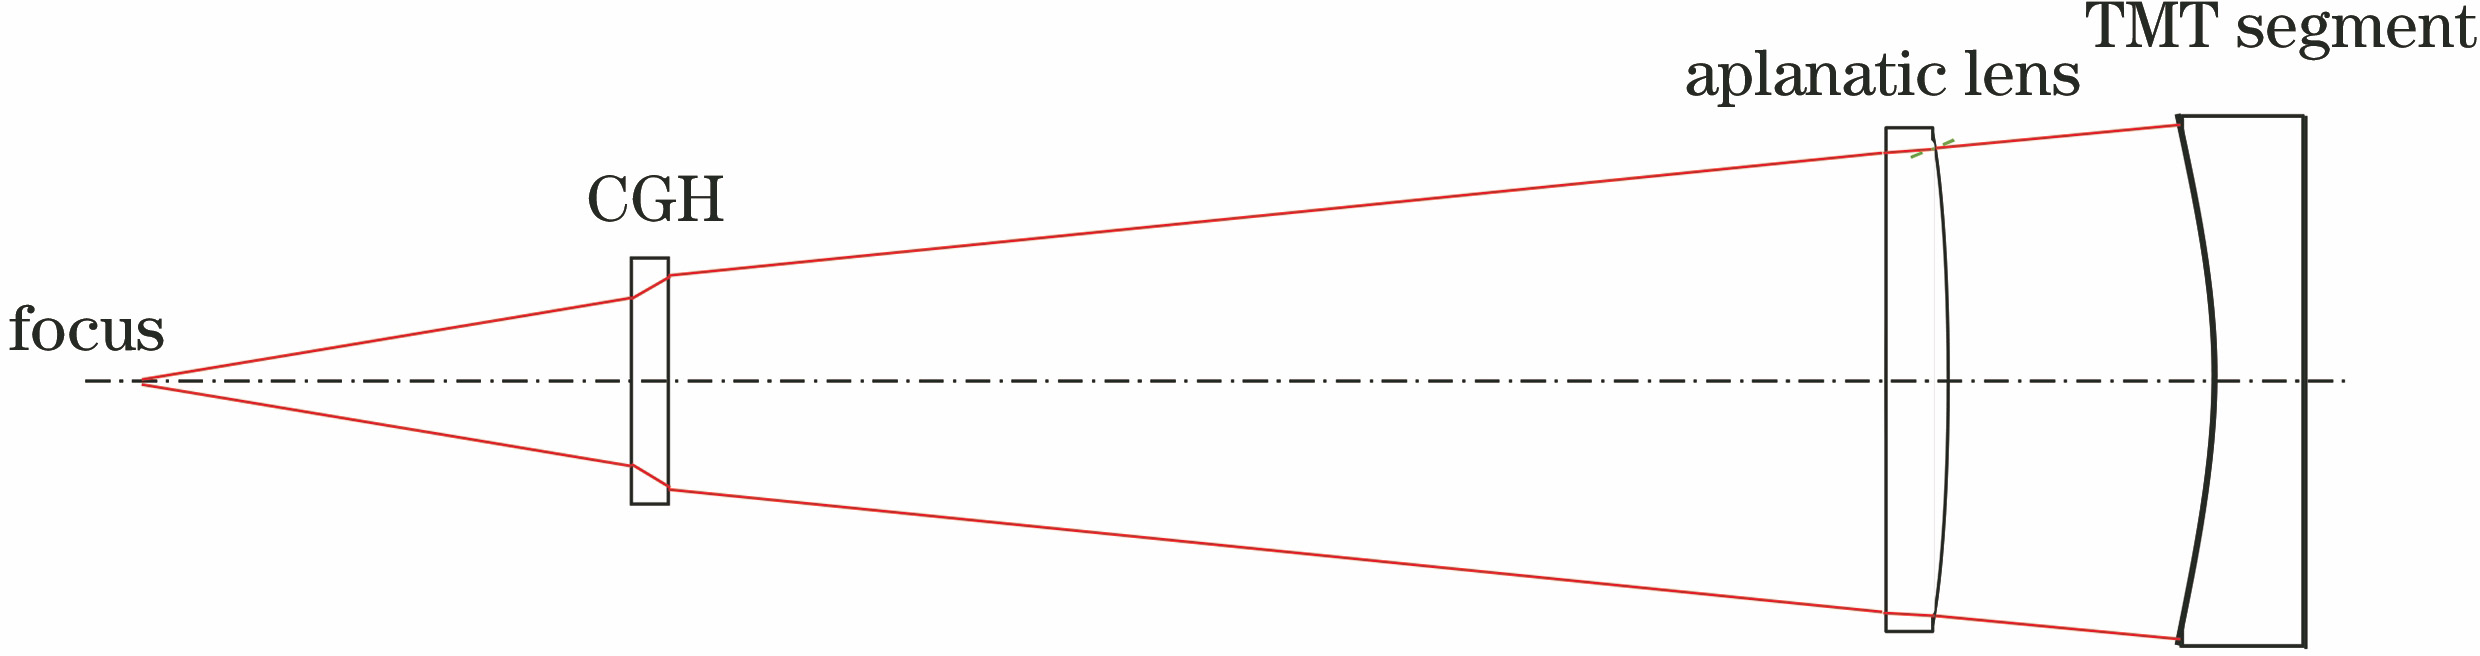 Sag and asphericity of TMT segments after rotation and translation. (a) Max sag and max asphericity of TMT segments as functions of off-axis distance; (b) sag distribution and (c) asphericity distribution of TMT segment with off-axis distance of 13.99 m